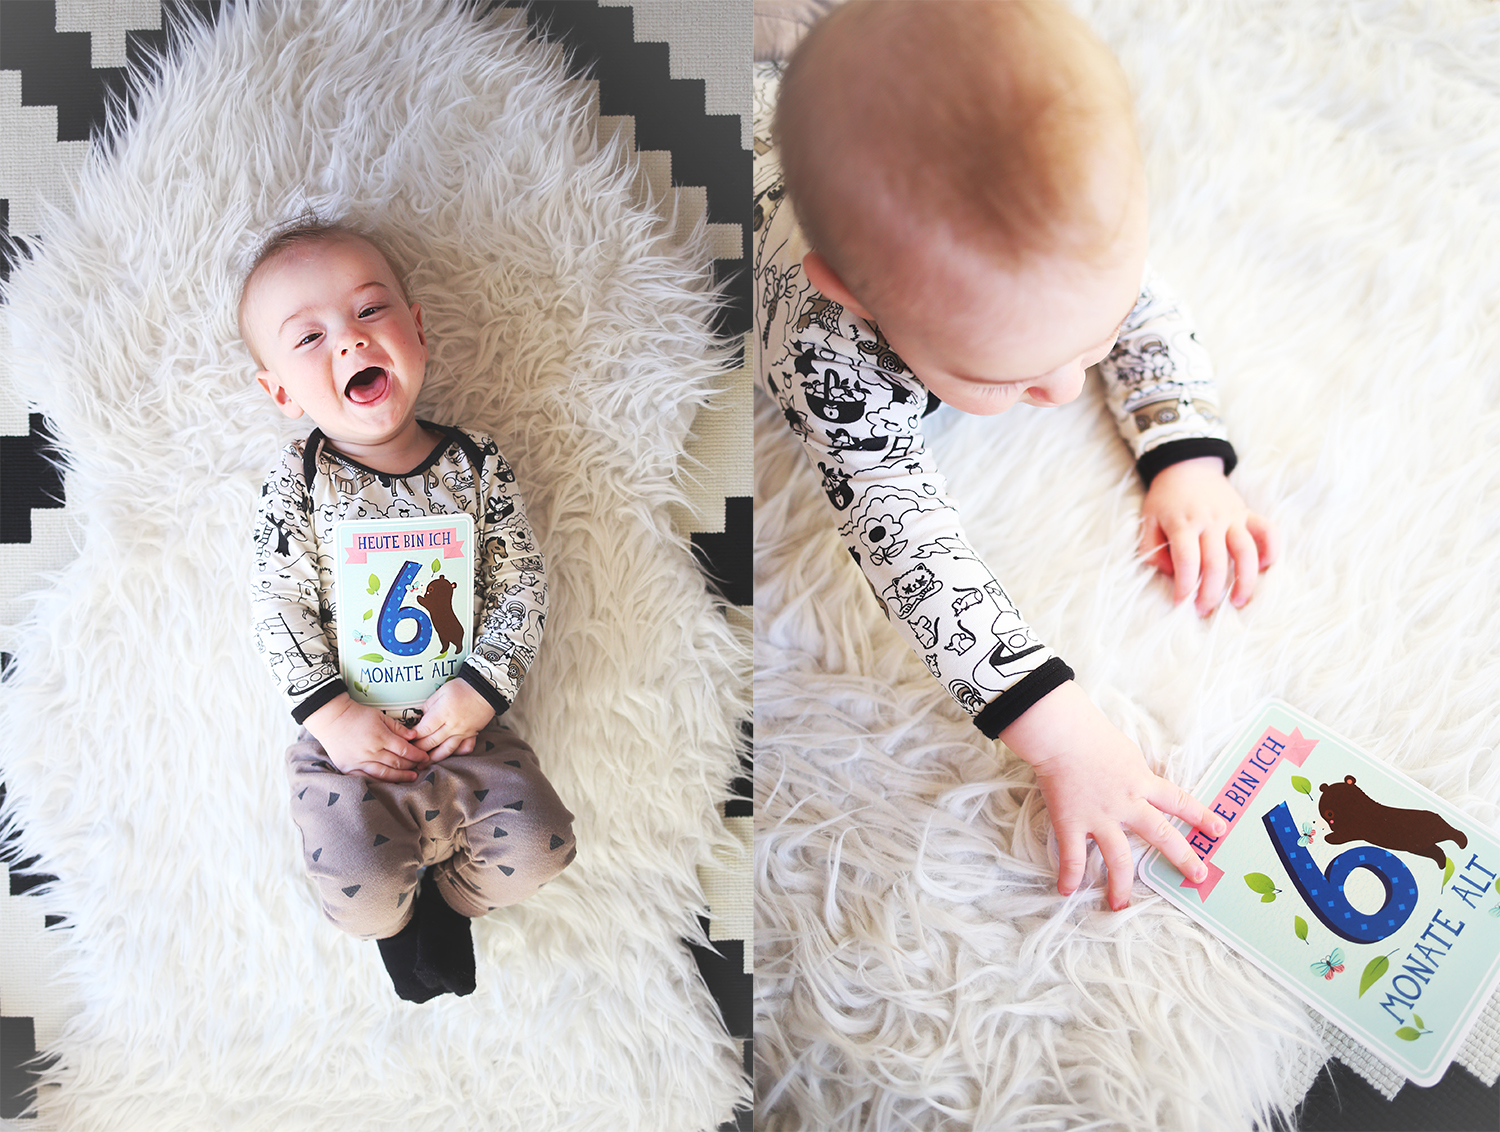 Baby-Update-6-month-Monate-Babyglueck-Post-26-Wochen-Babyboy-Elternglueck-Milestone-Baby-Cards-Wunderhaftig